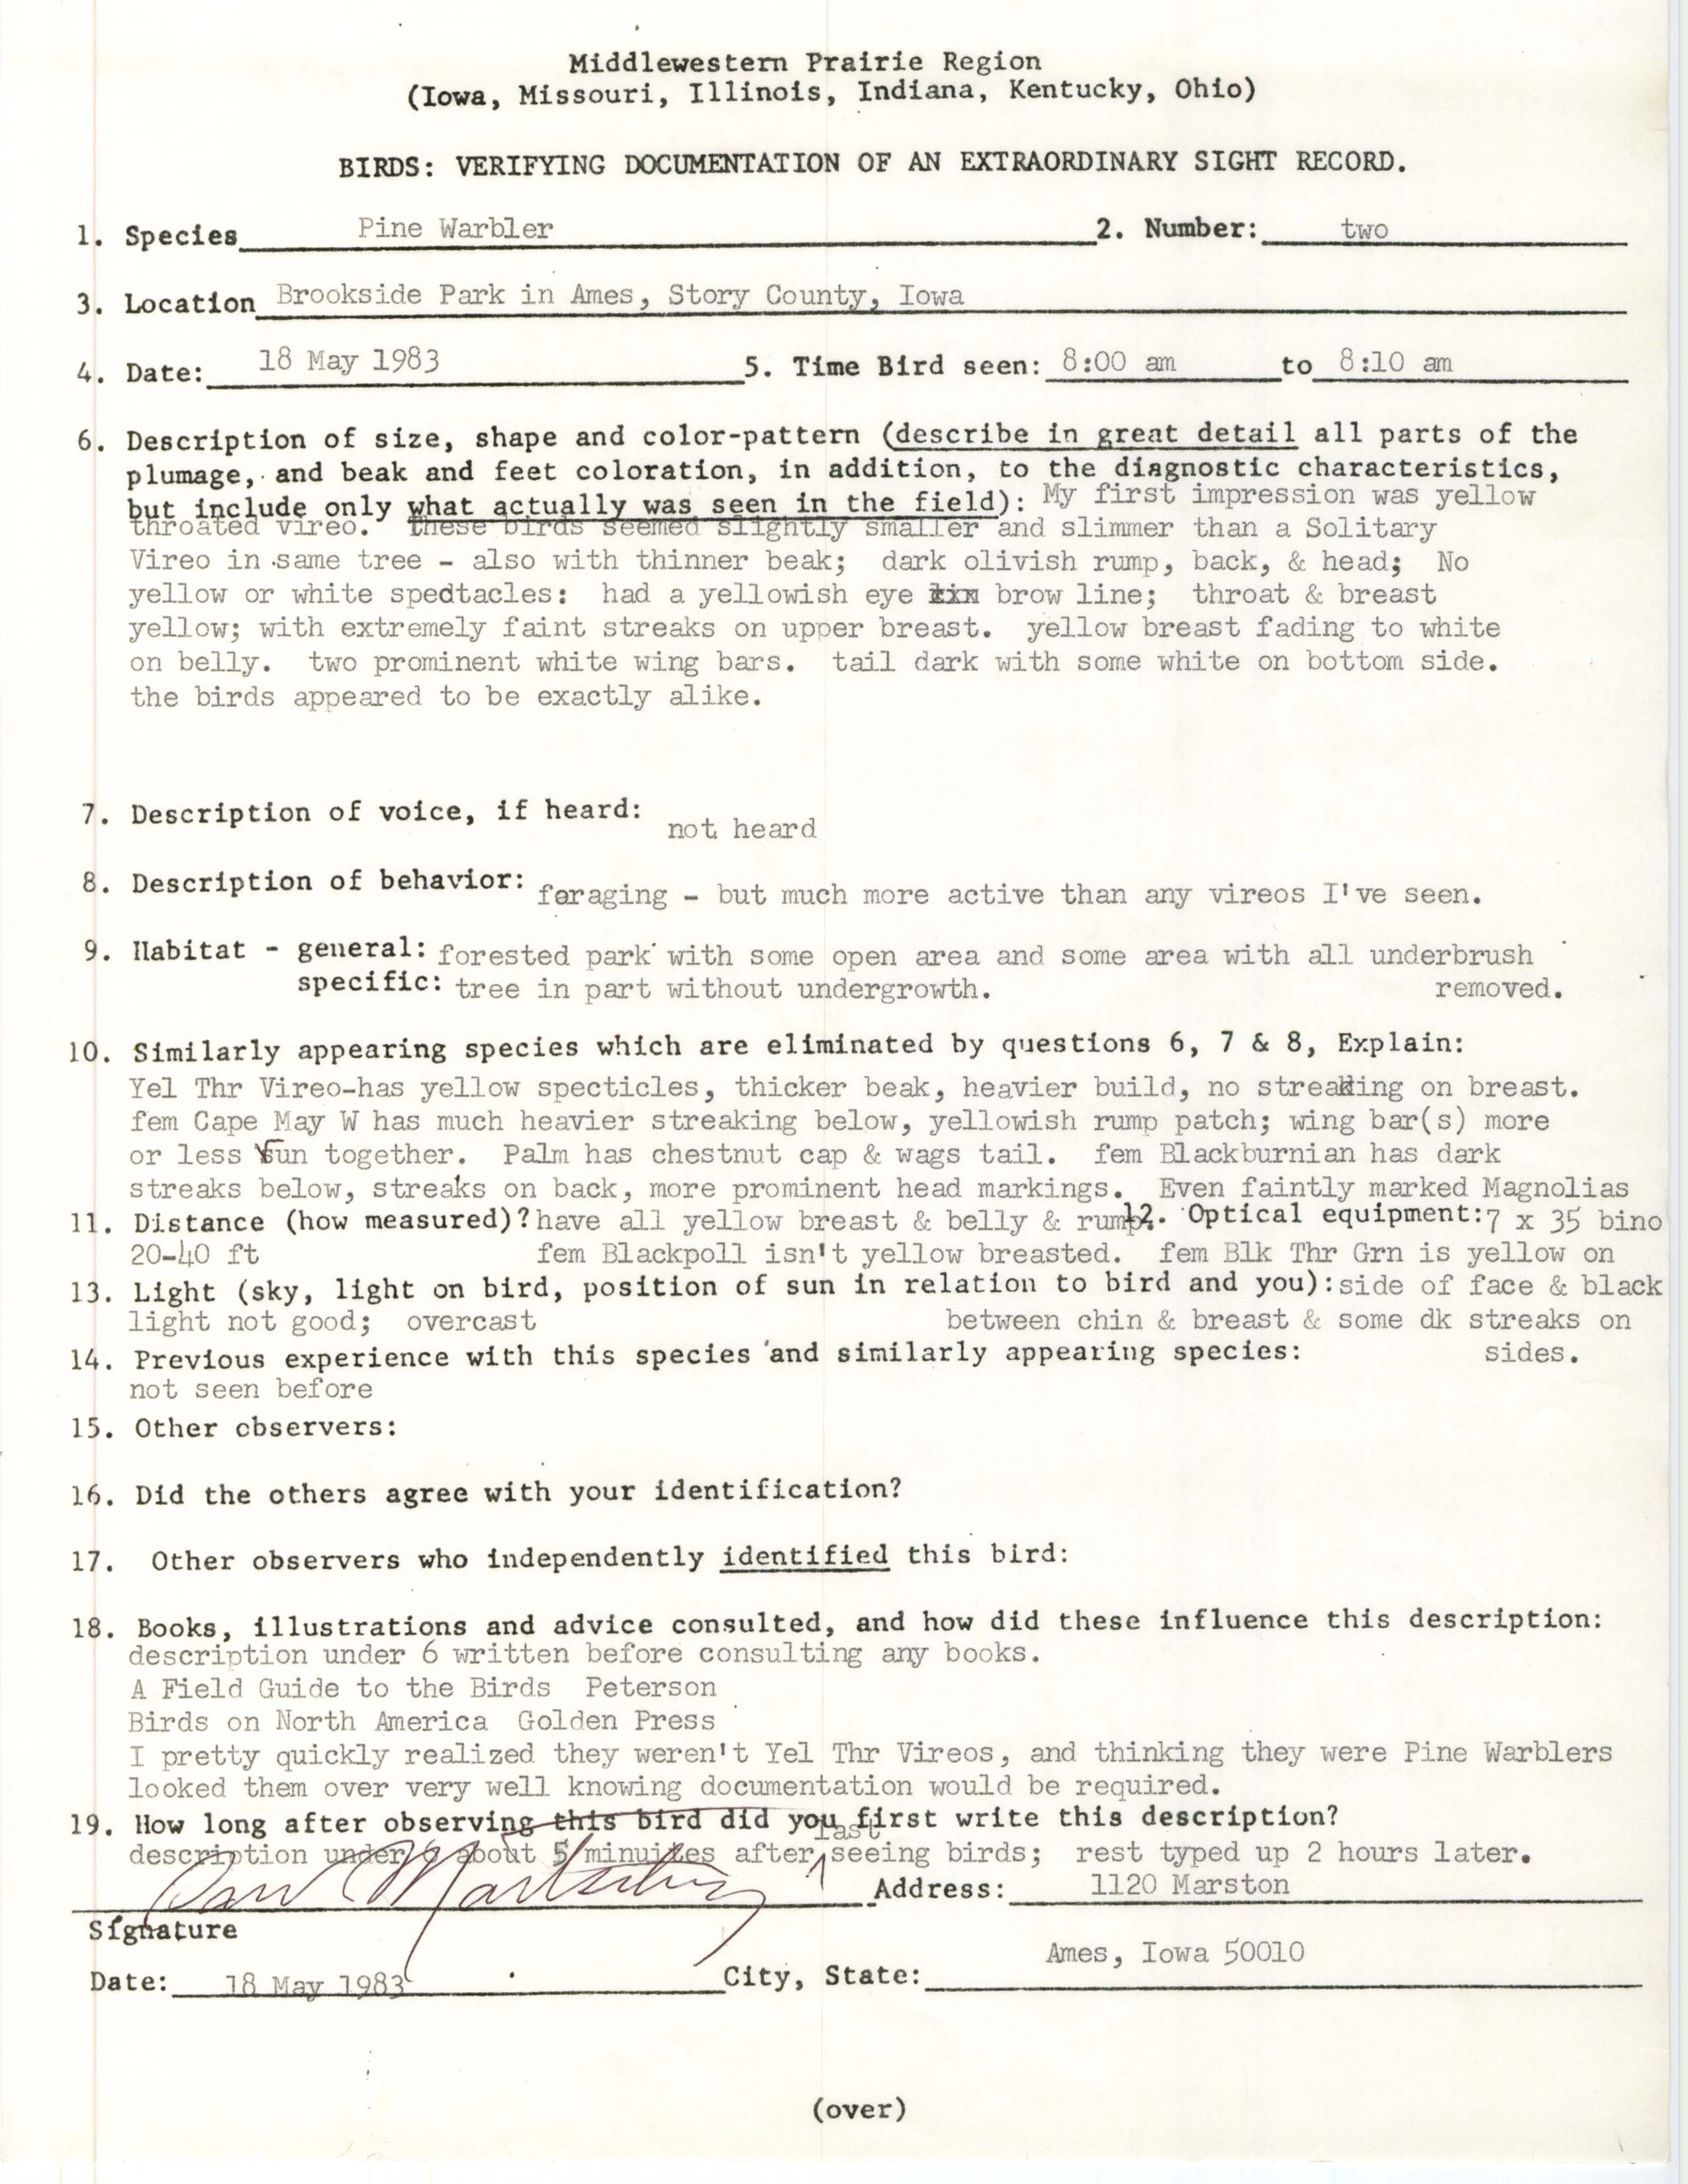 Rare bird documentation form for Pine Warbler at Brookside Park in Ames, 1983